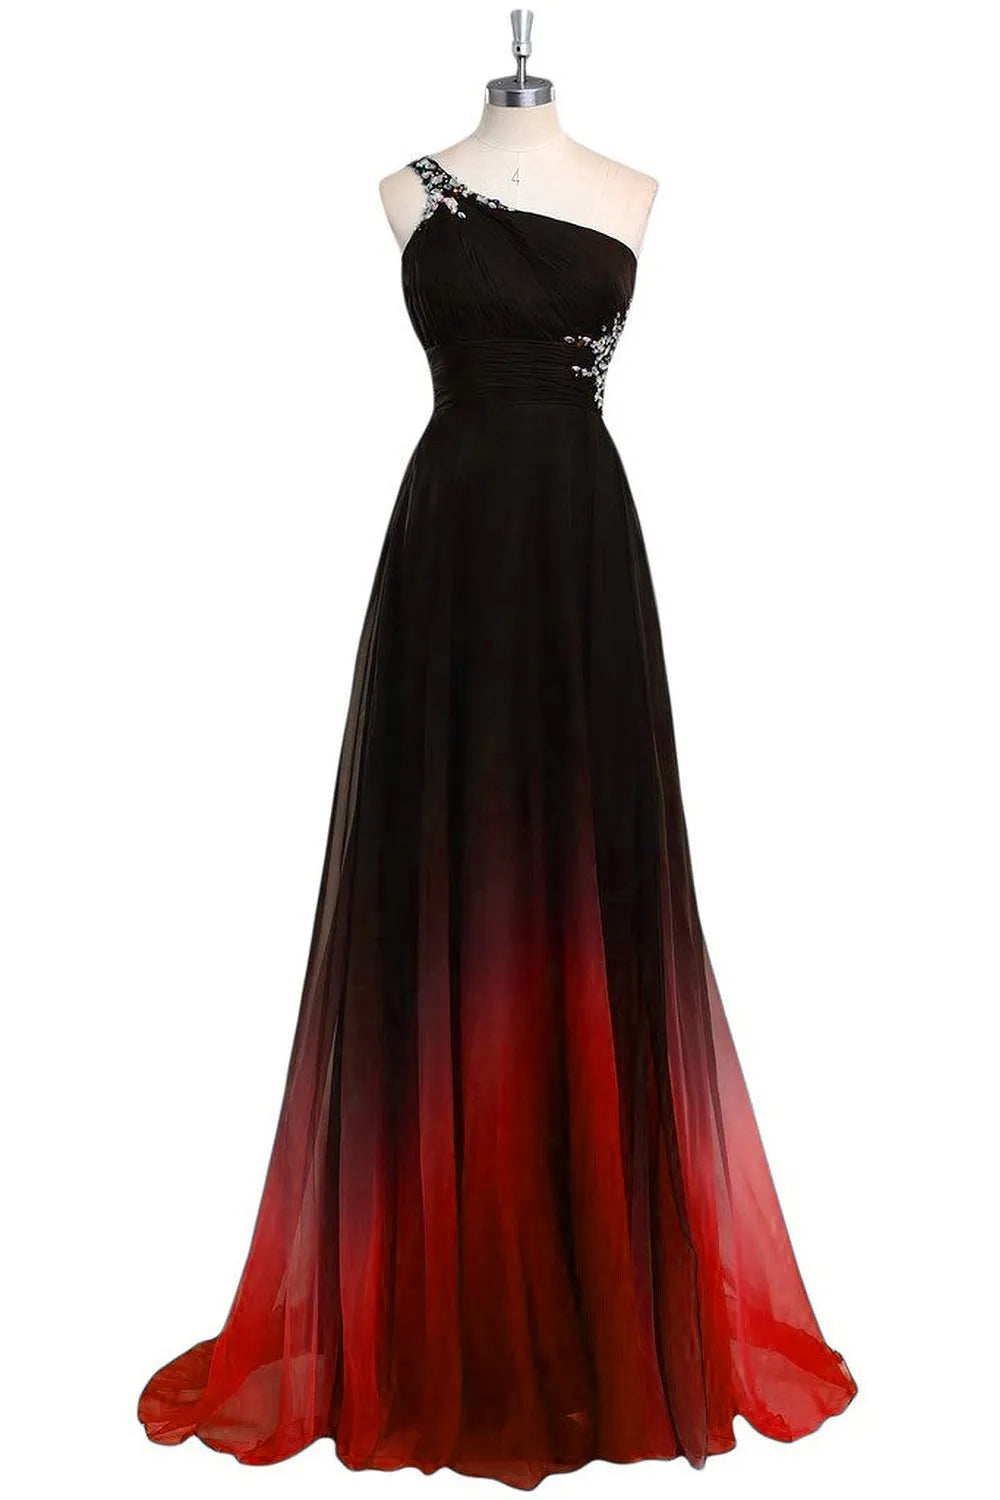 Women's Gradient Color Prom Dresses Chiffon Beaded Evening dress cg3624